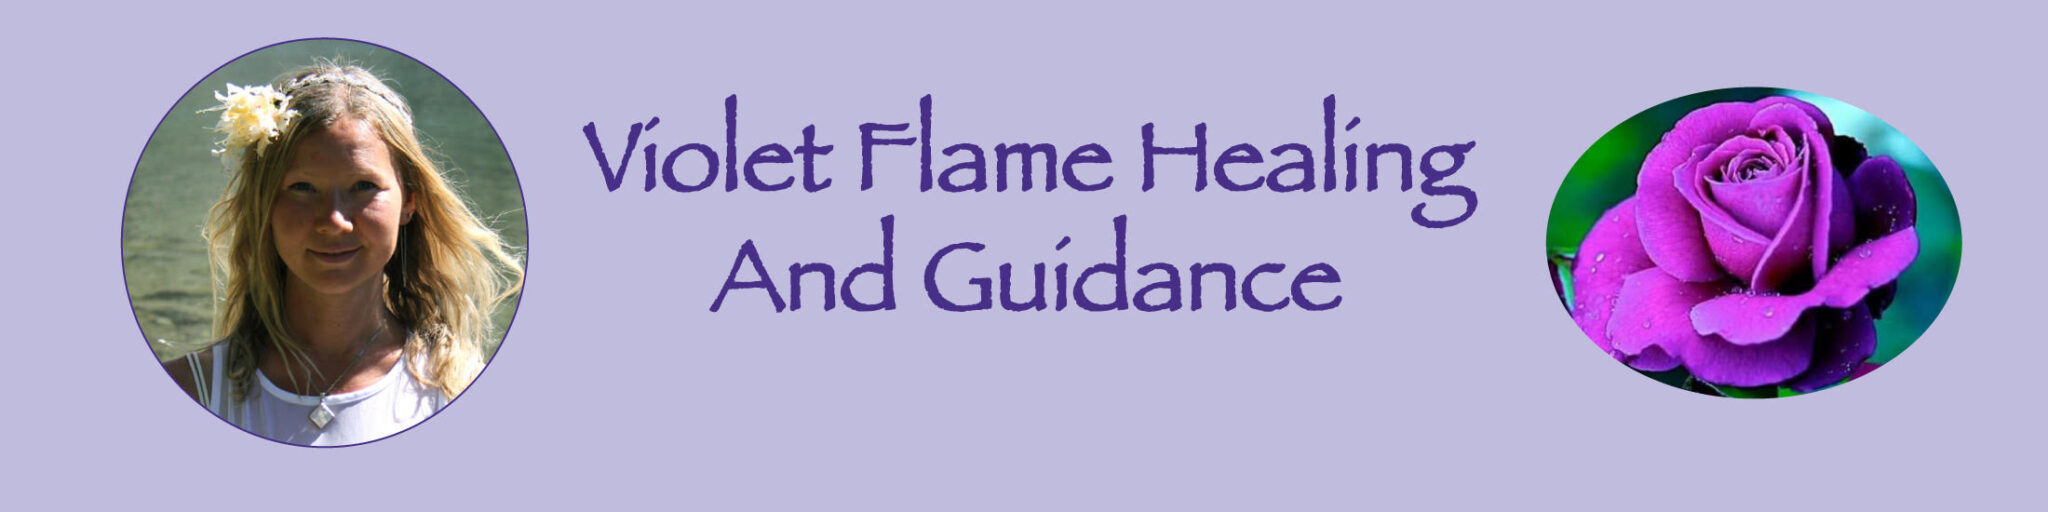 Violet Flame Healing & Guidance - Lightworker, Healer, Guide